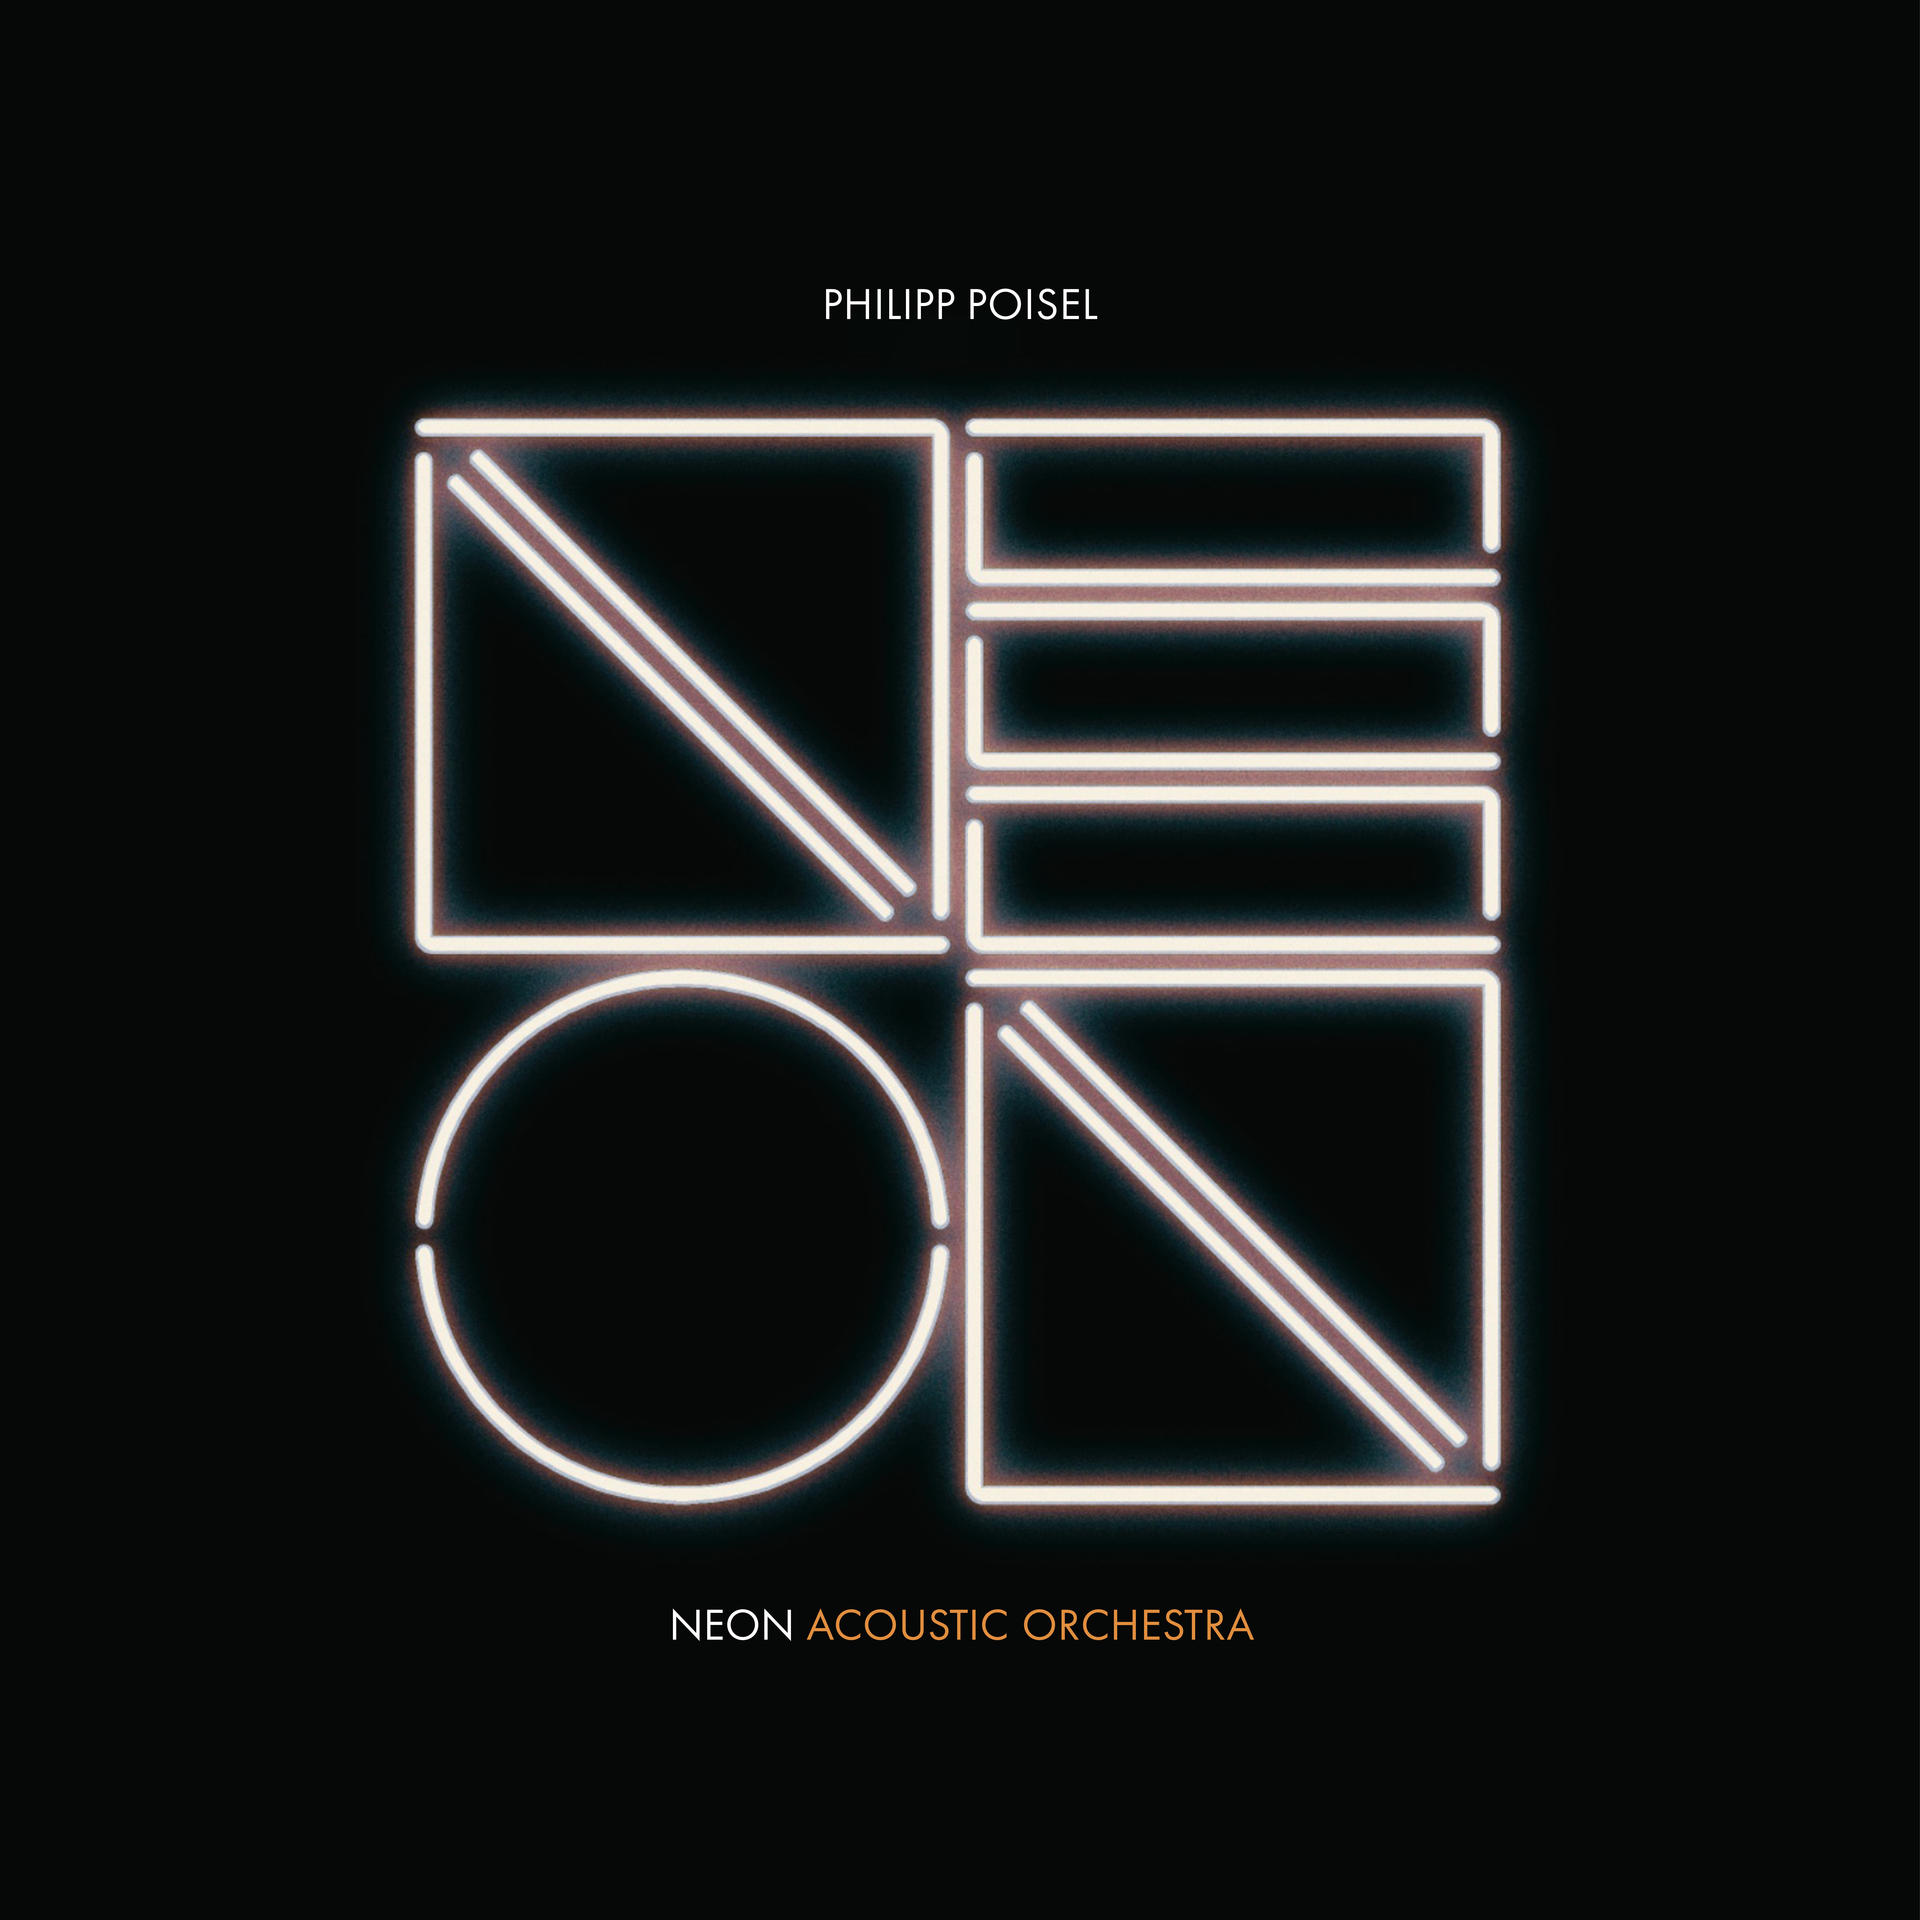 (Vinyl) - Orchestra Acoustic Neon Poisel Philipp -